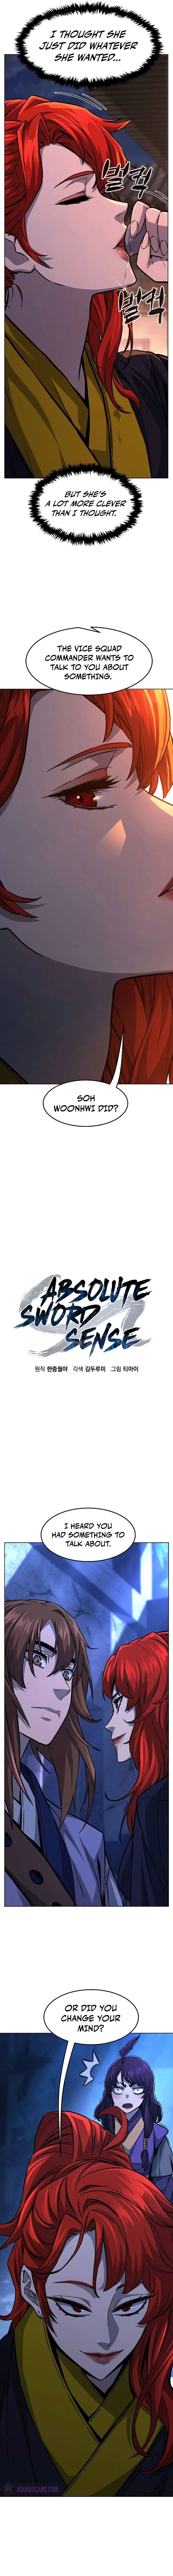 Absolute Sword Sense 80 6